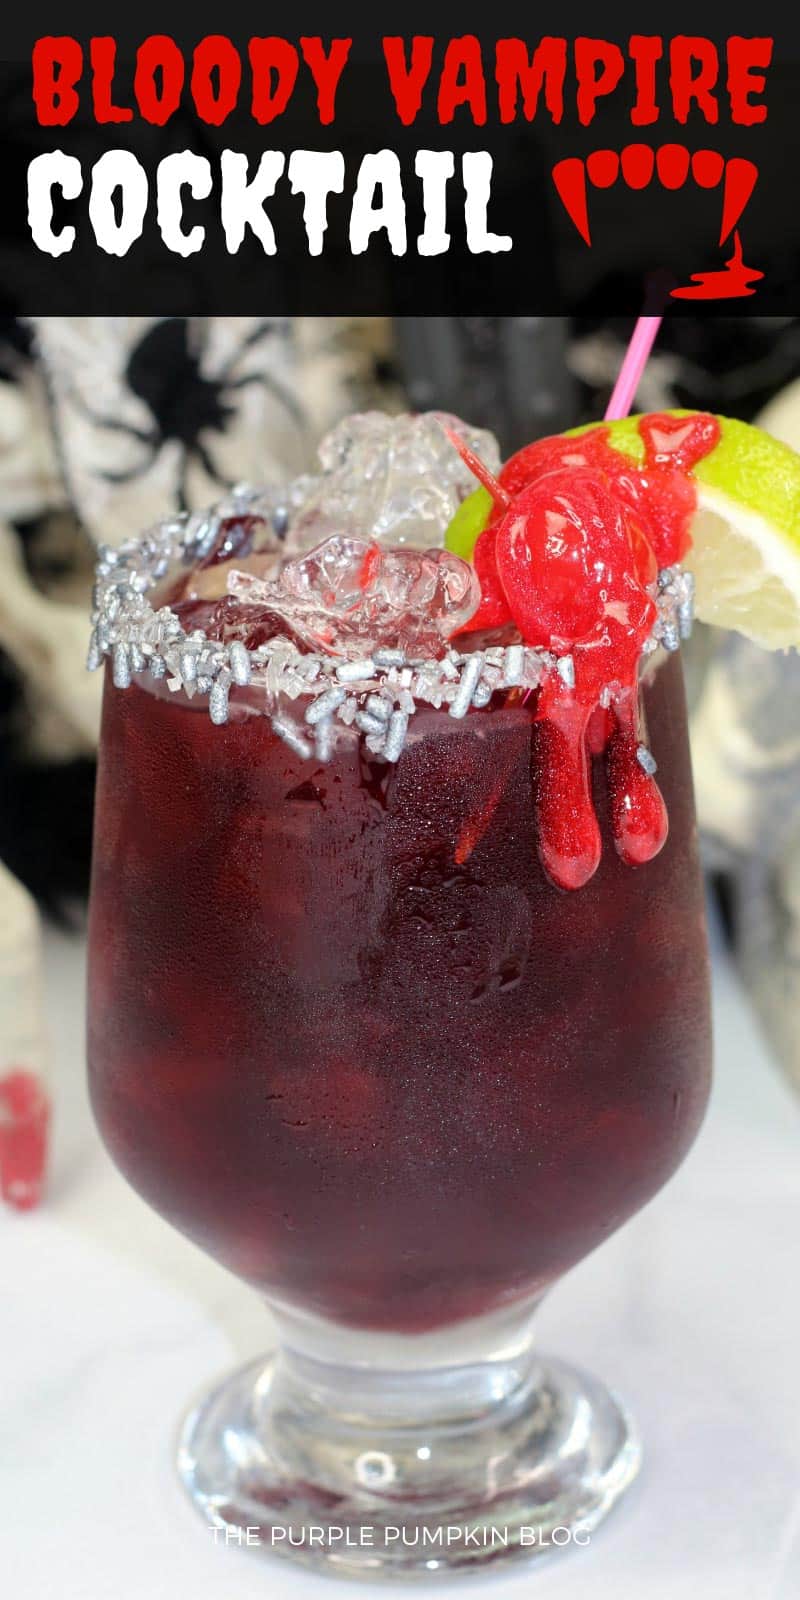 Bloody Vampire Cocktail - Easy Halloween Drink for Vampires!